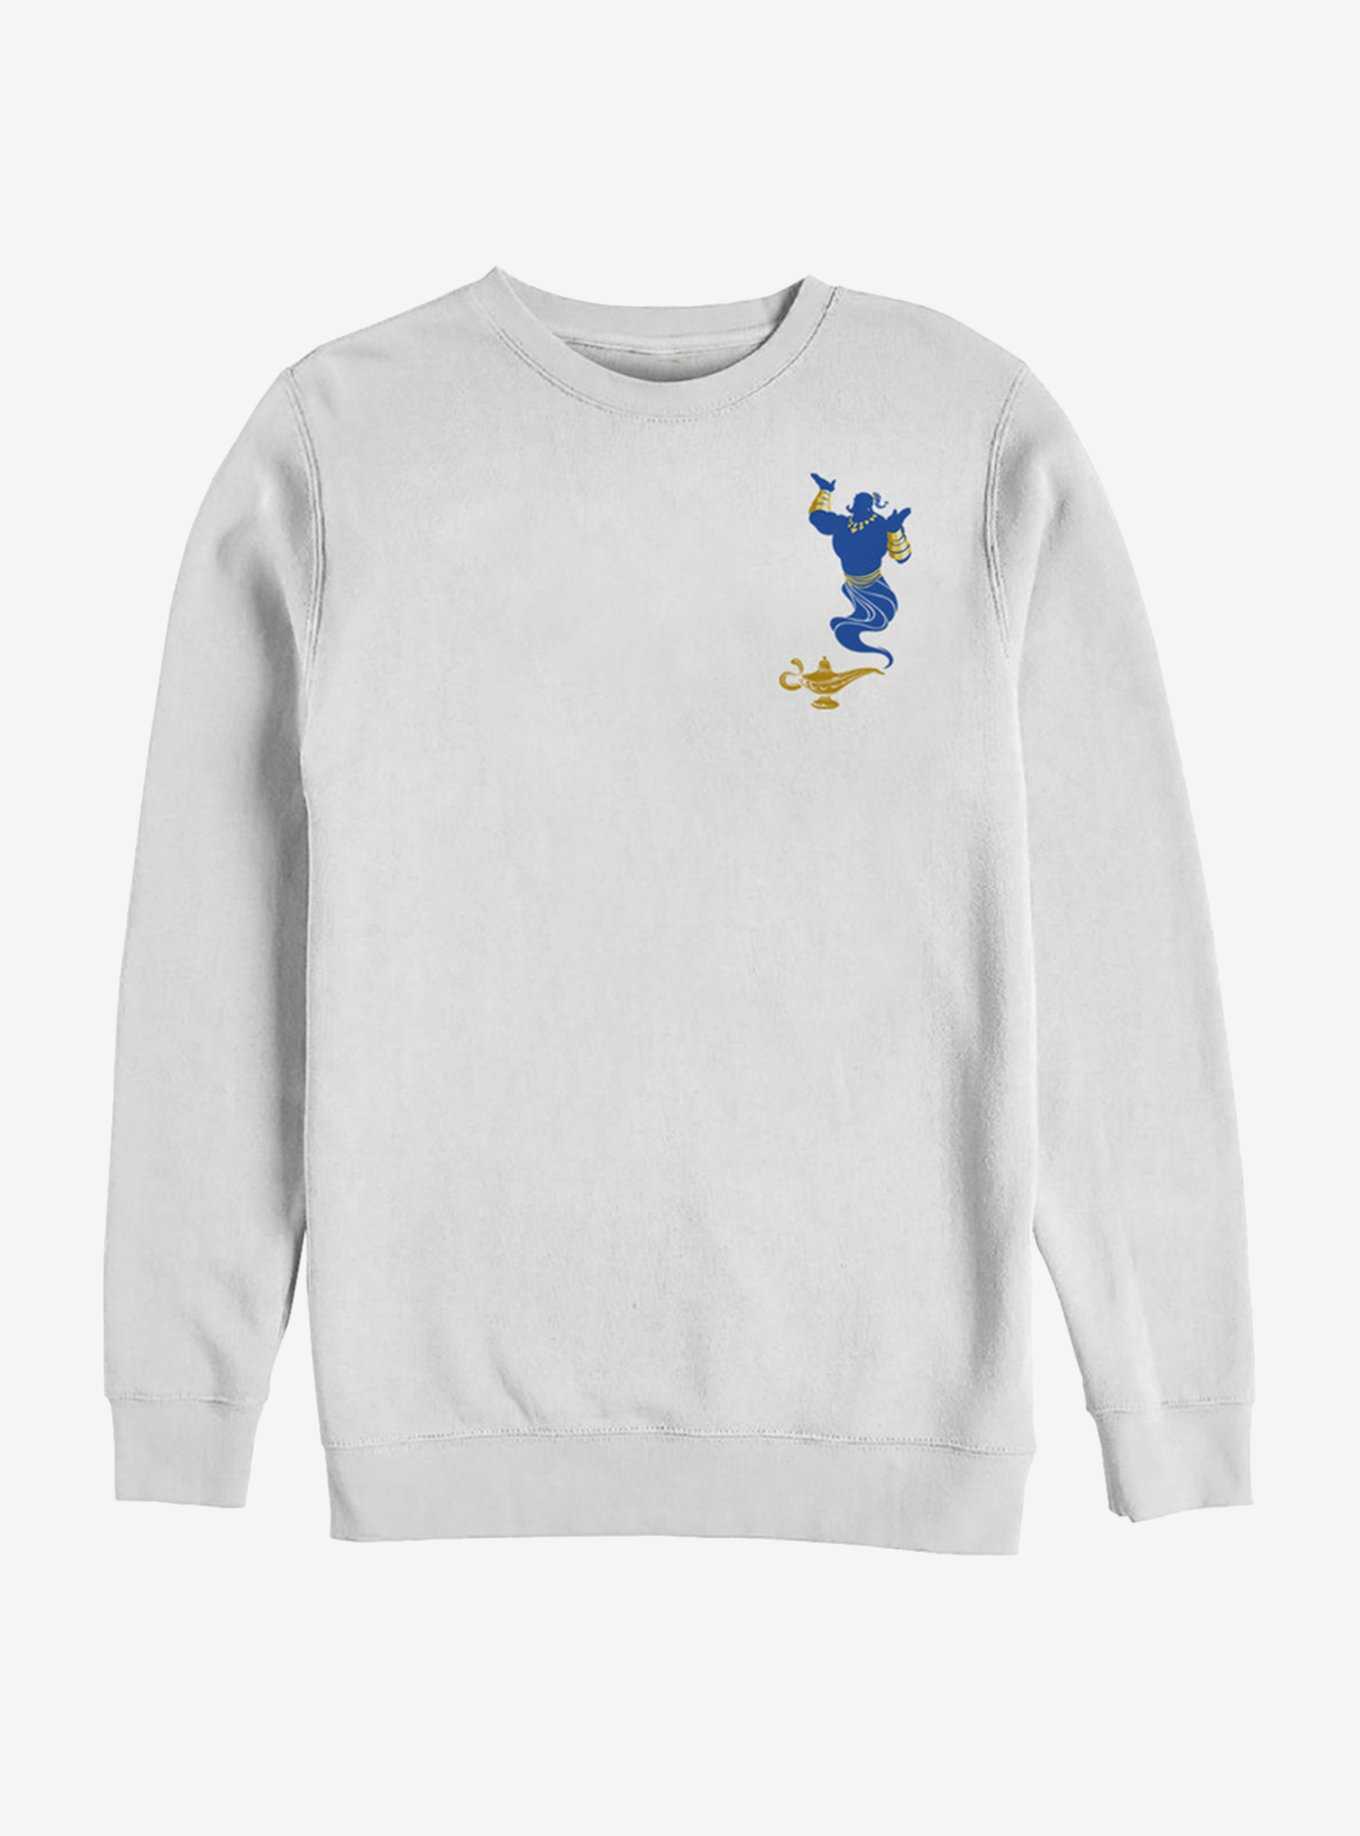 Disney Aladdin 2019 Pocket Lamp Sweatshirt, , hi-res